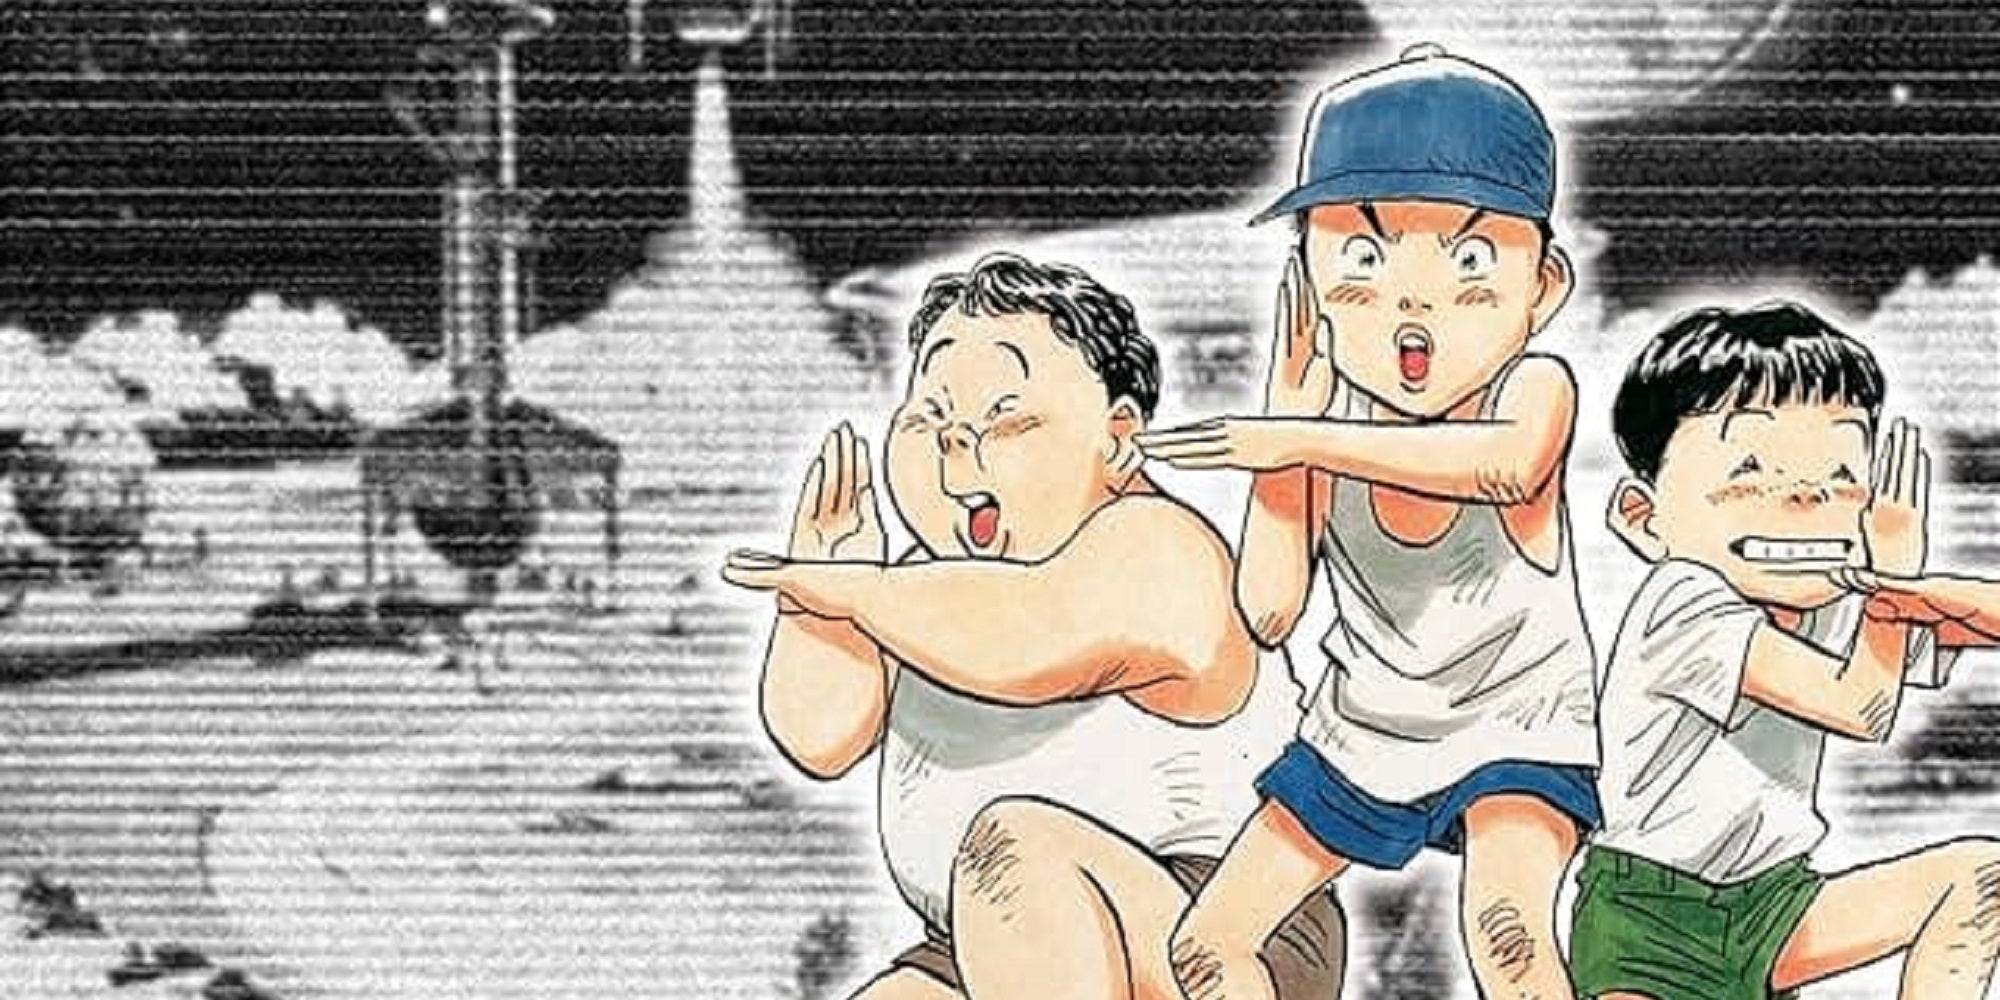 20th Century Boys manga cover